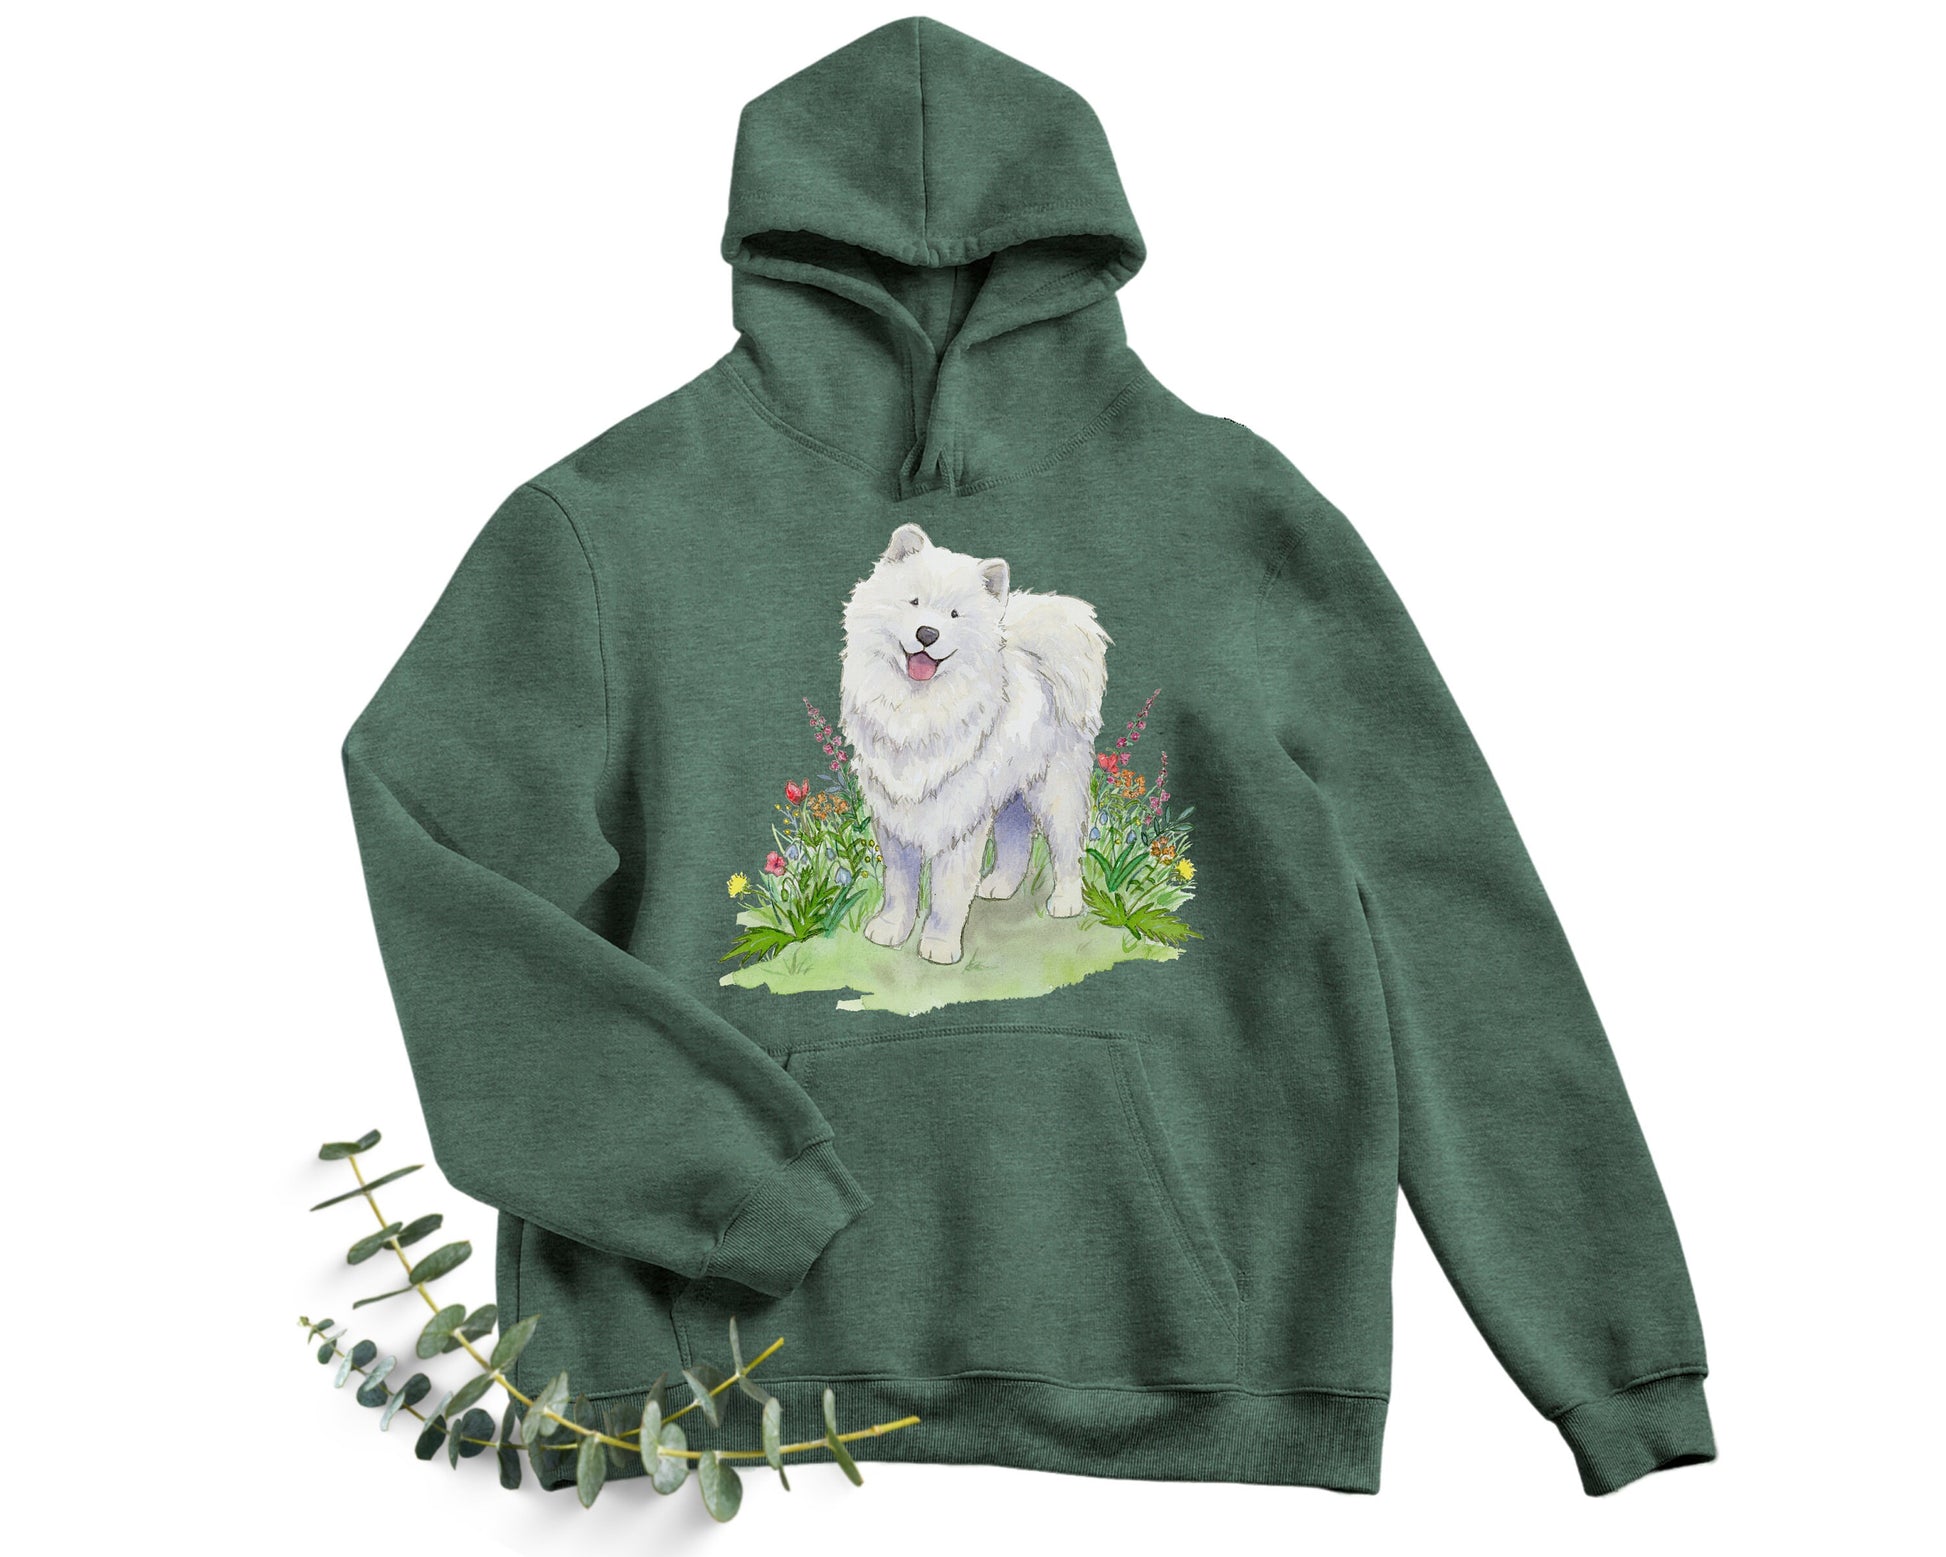 Green hooded sweatshirt with cute artwork of samoyed dog and wildflowers